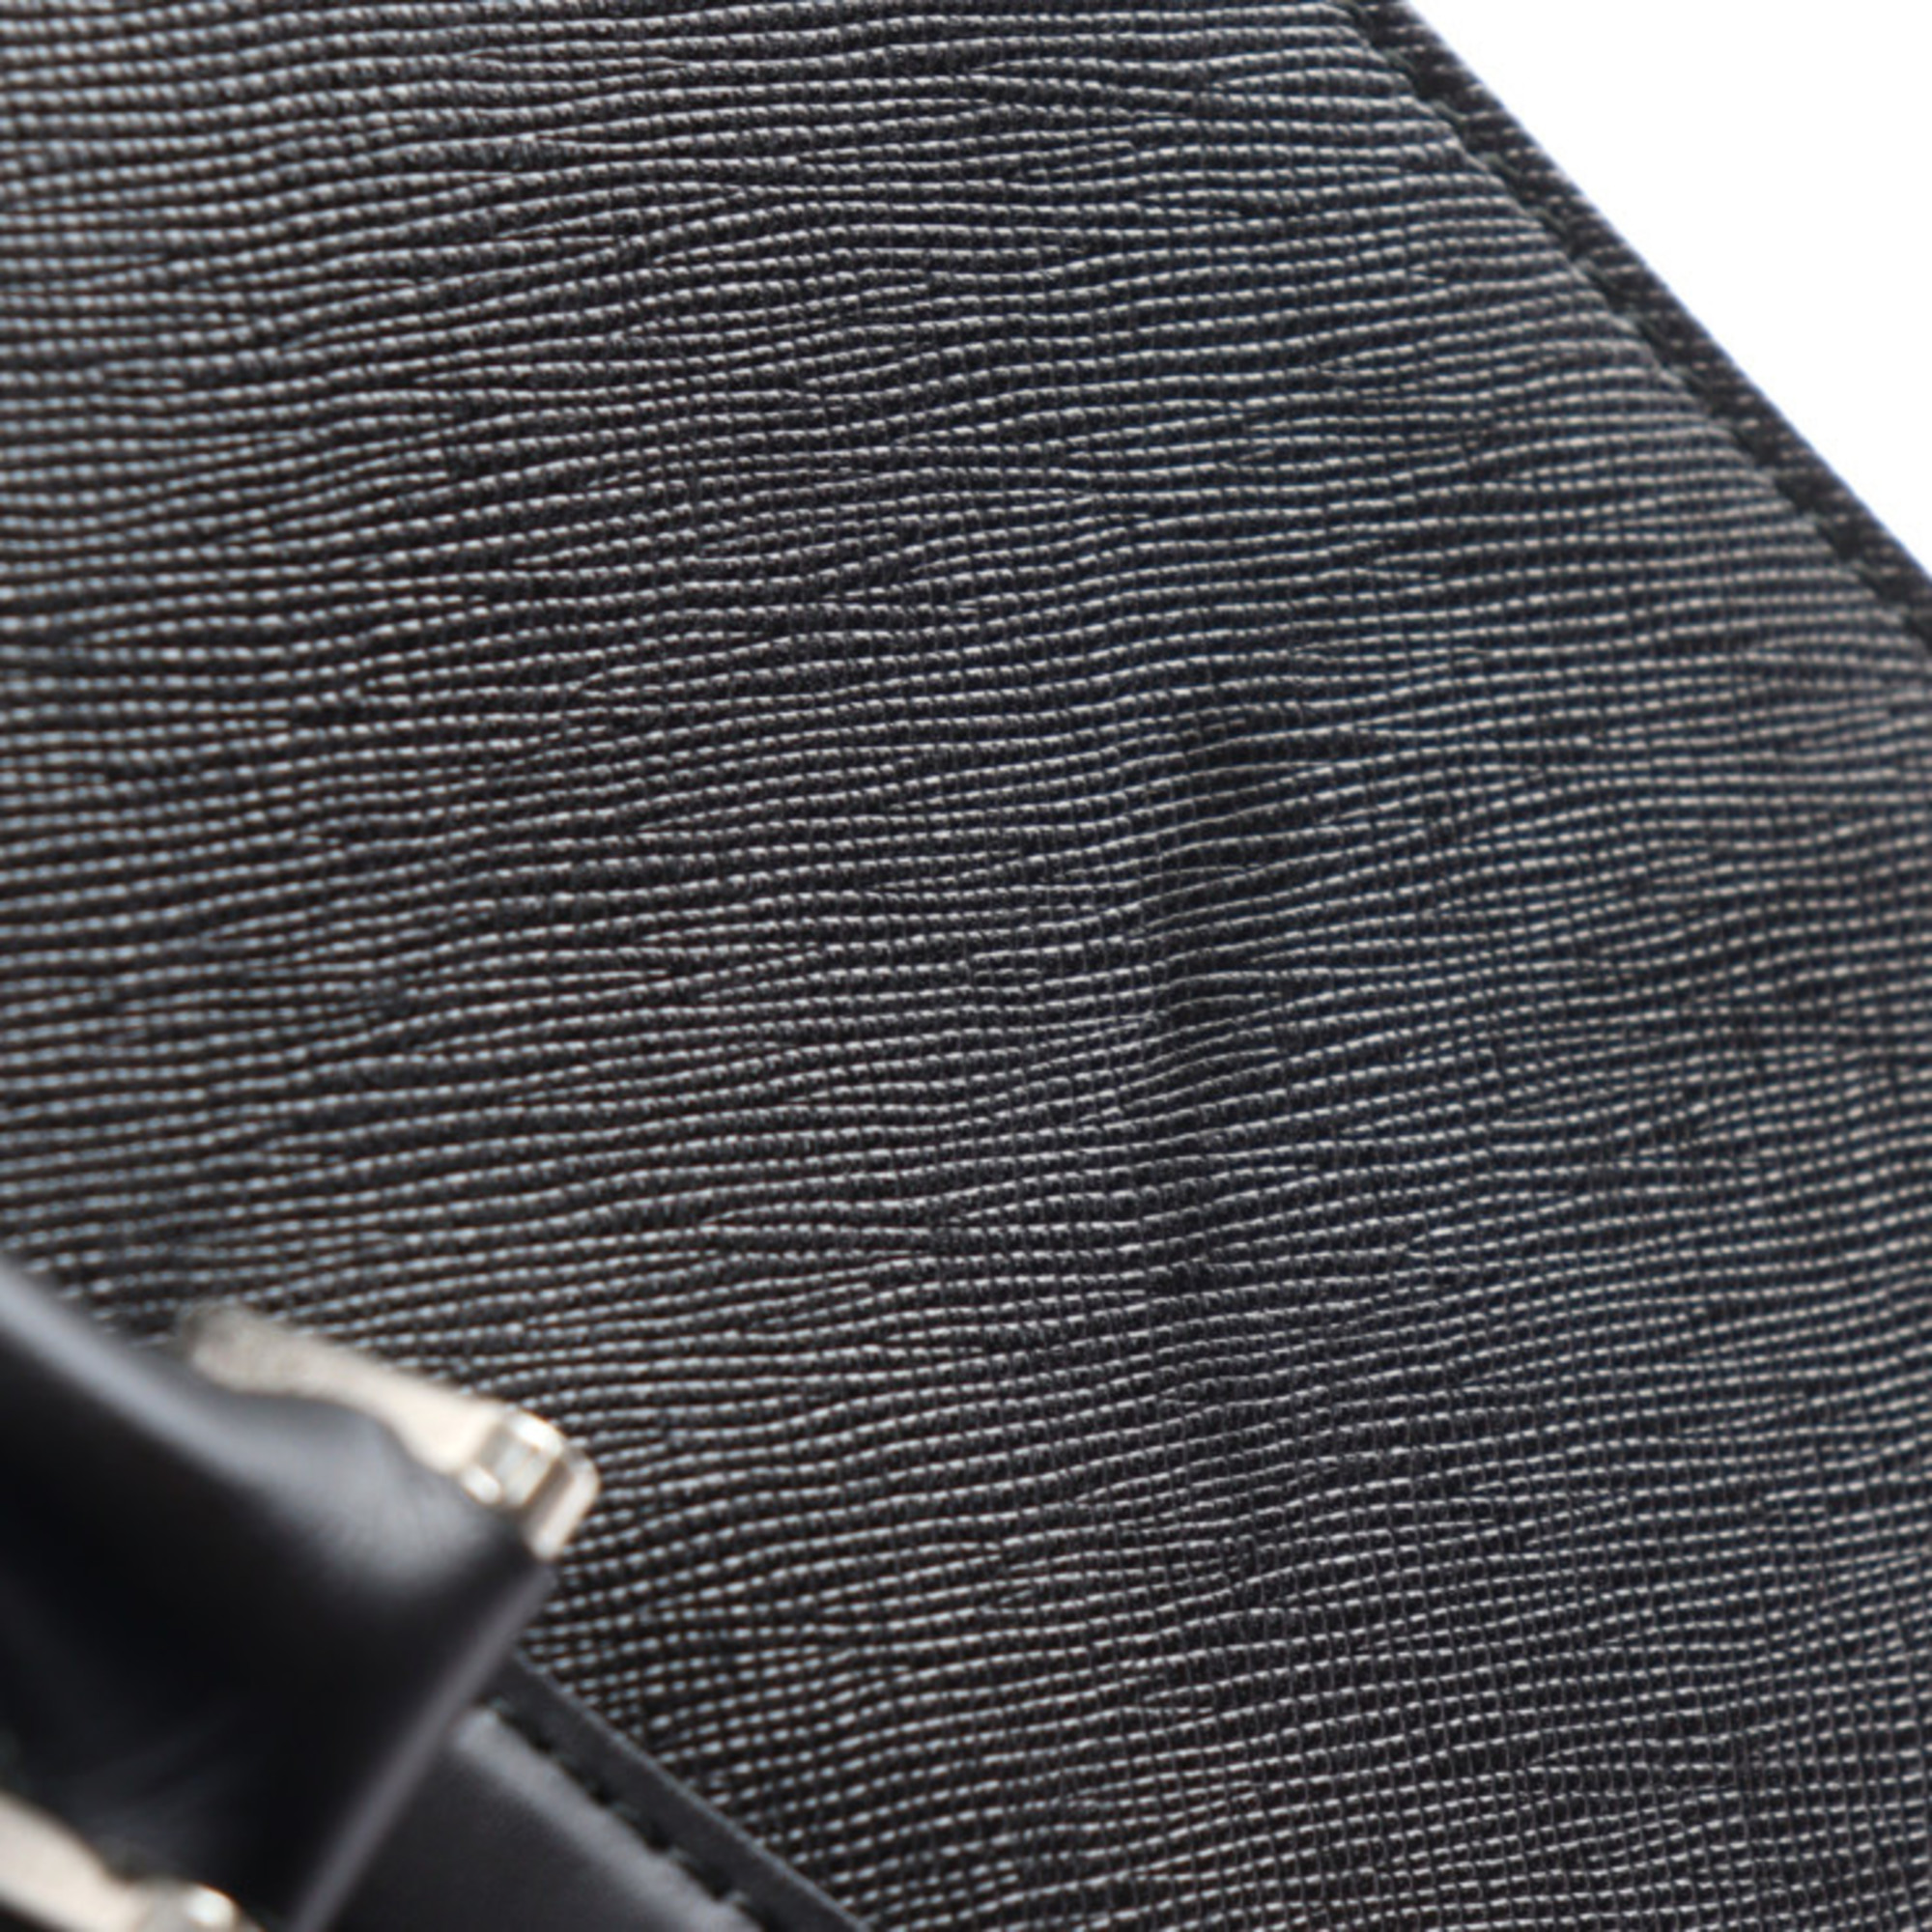 BURBERRY Burberry Bag Handbag Leather Black Flap